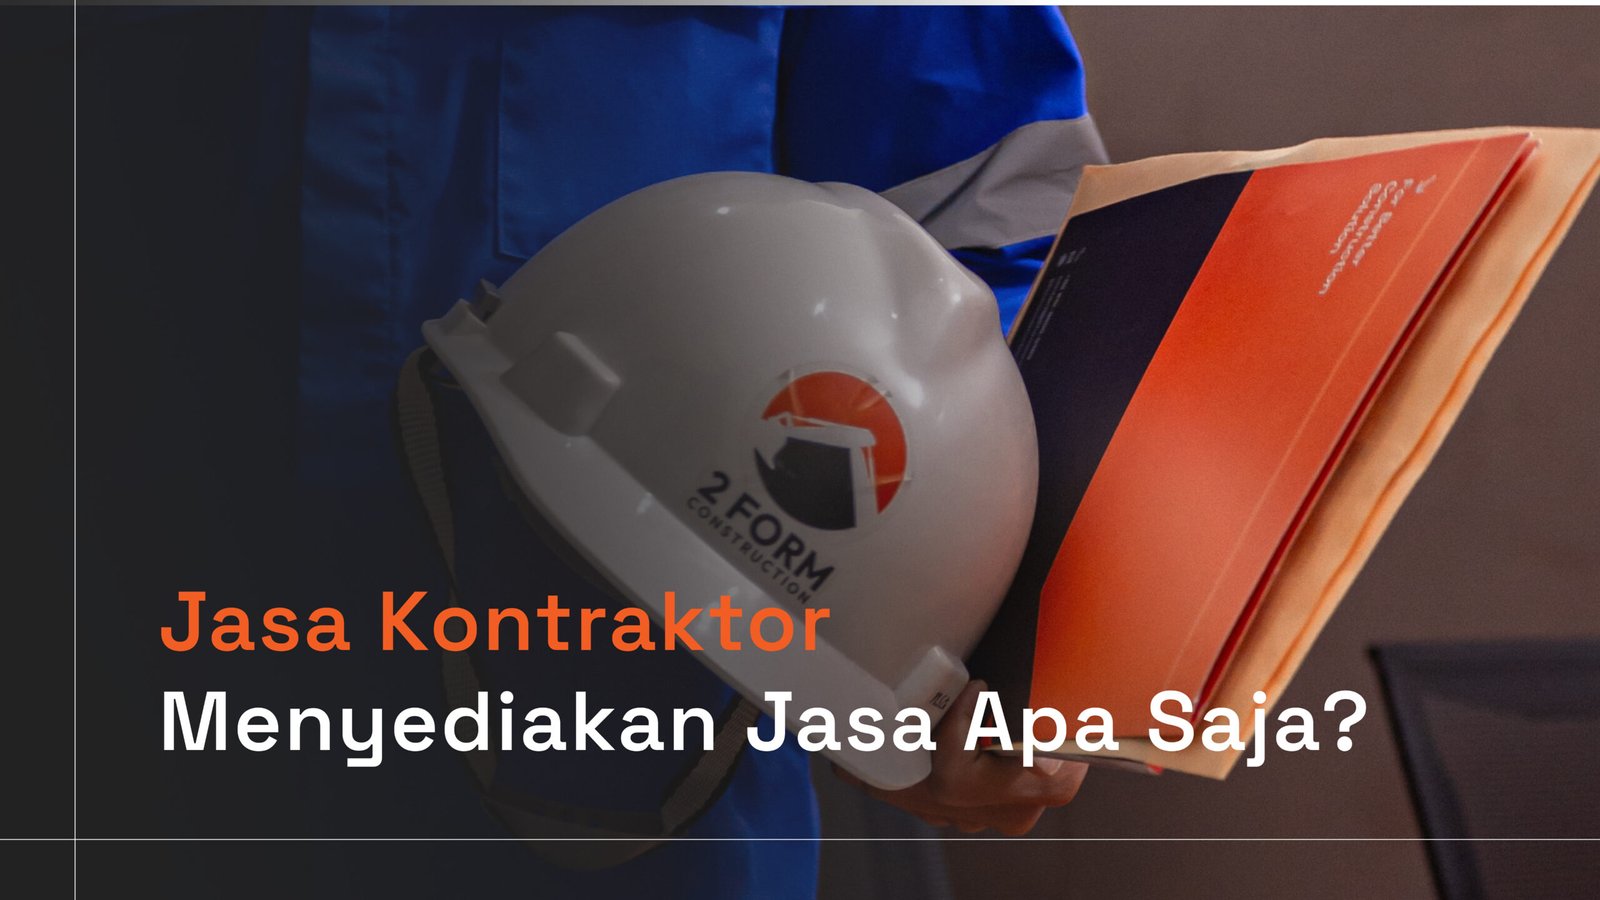 You are currently viewing Jasa Kontraktor Menyediakan Jasa Apa Saja?